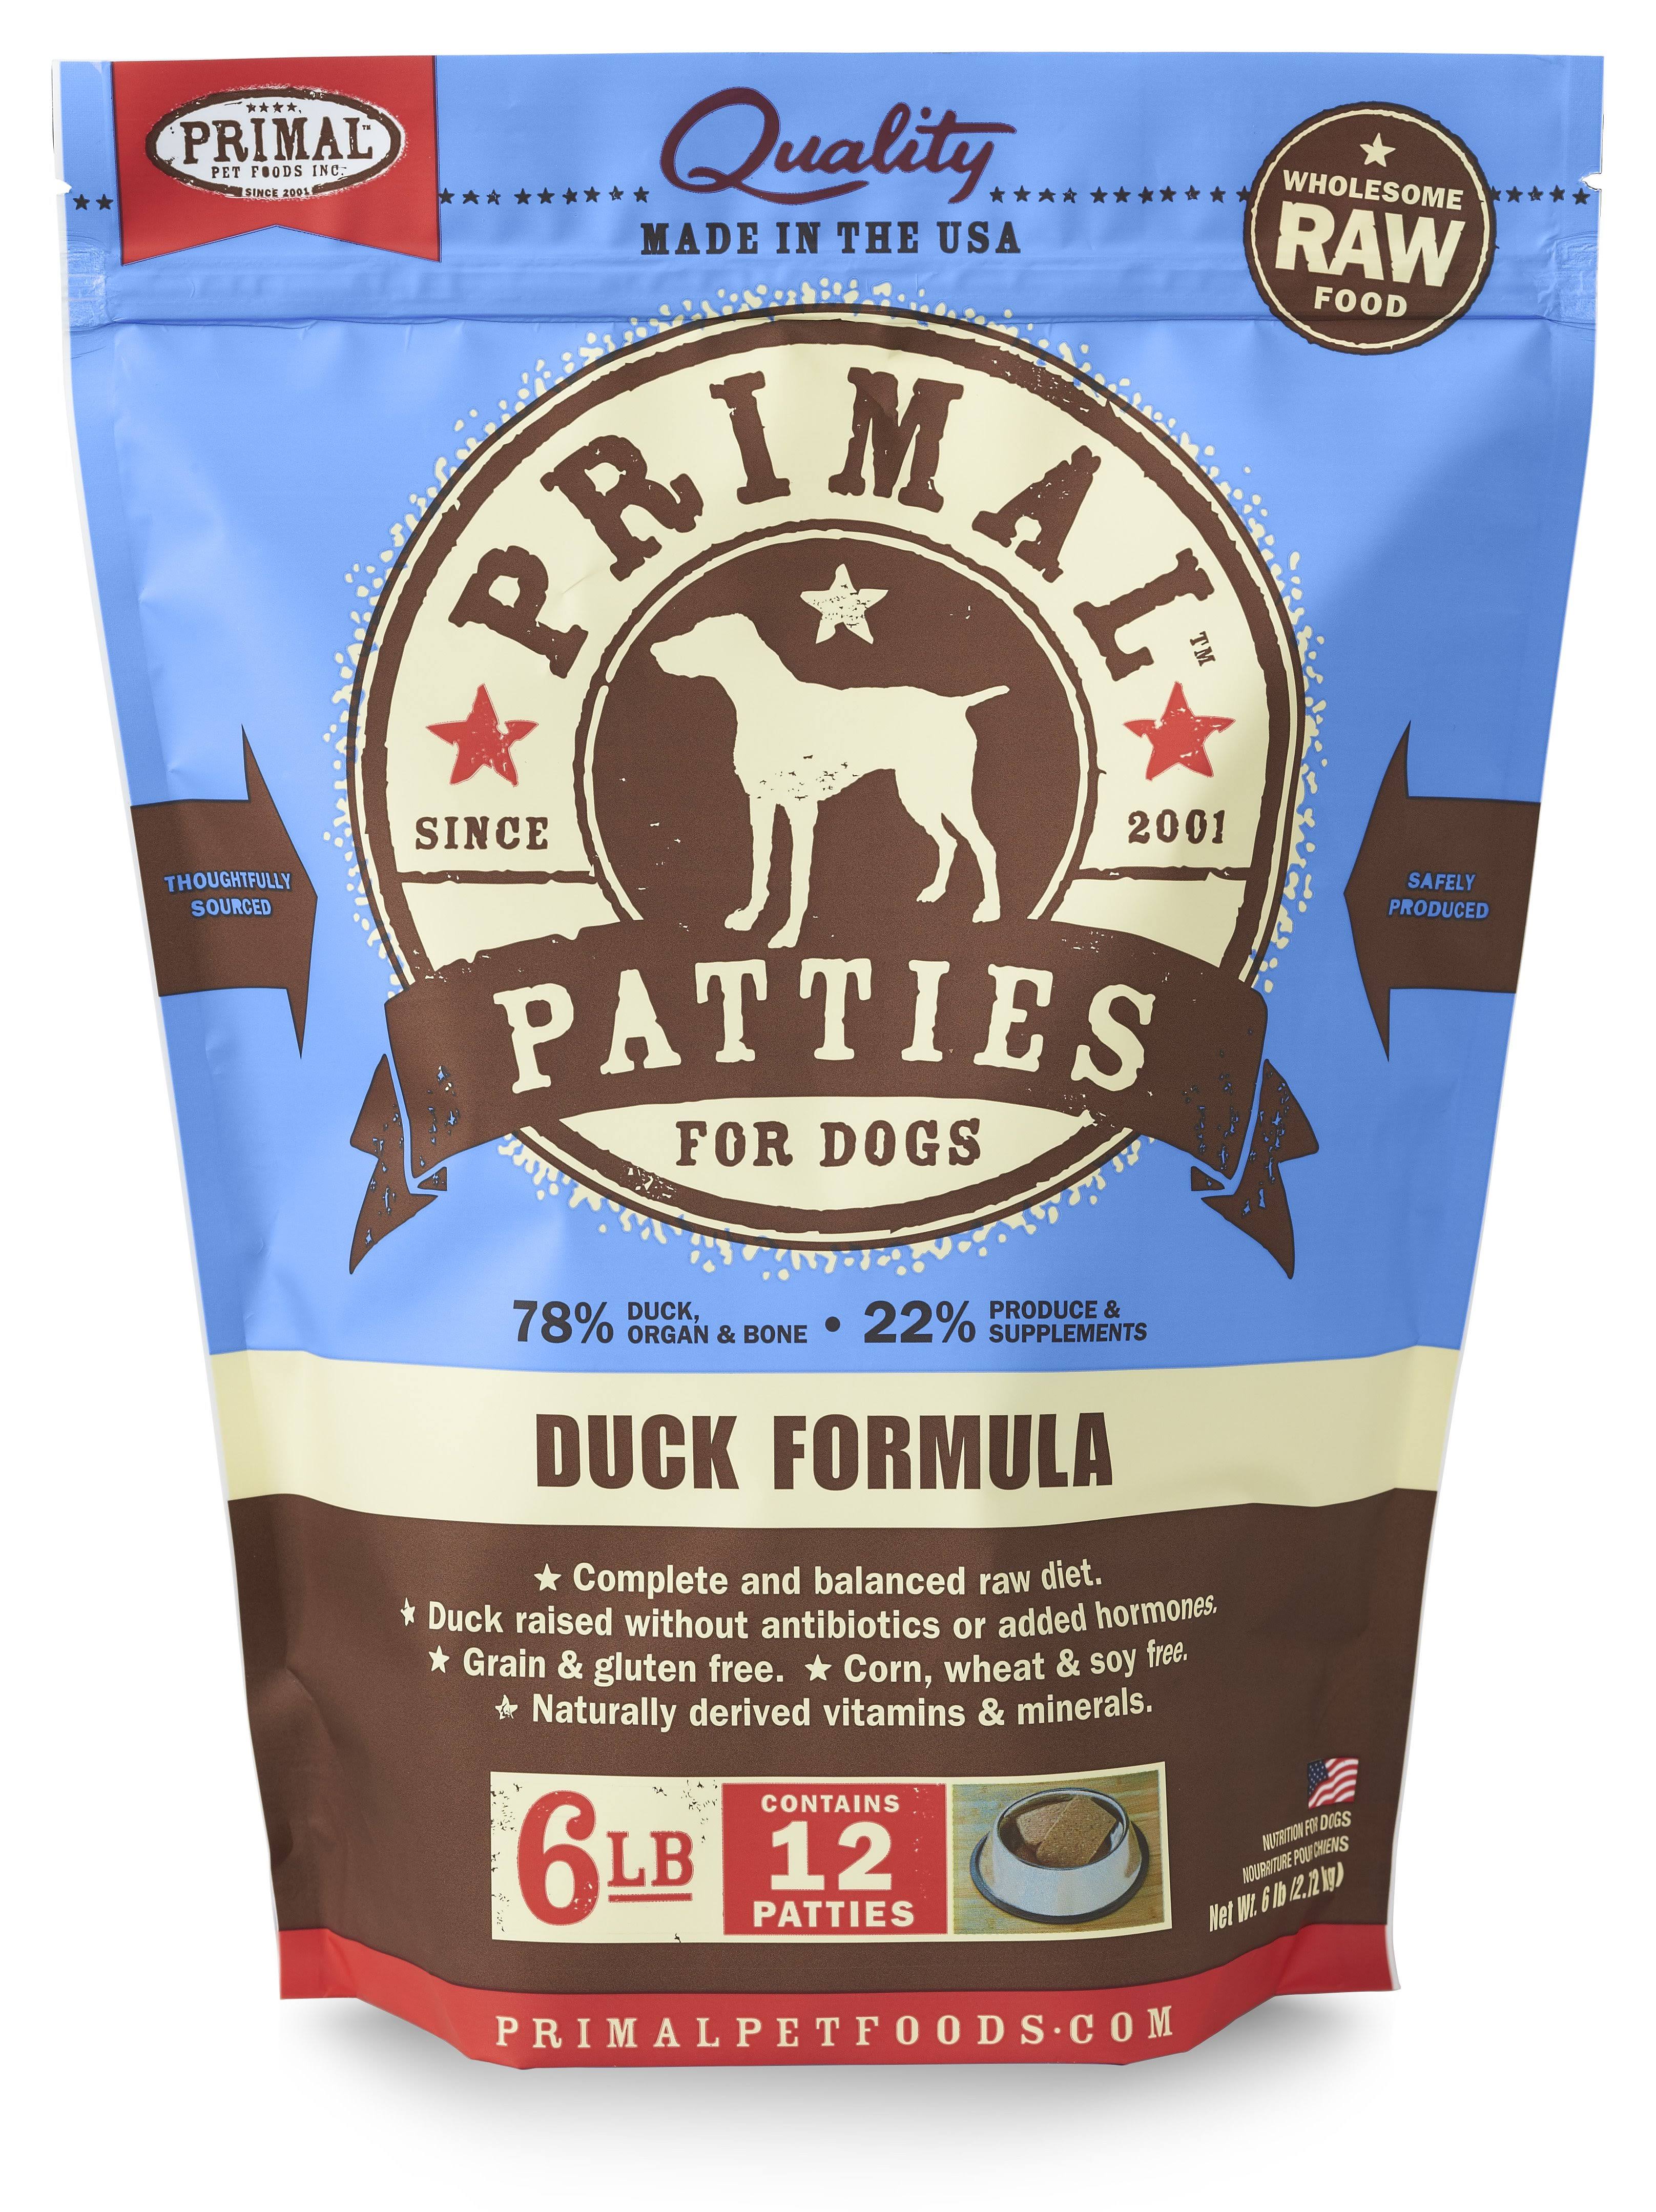 Primal Raw Frozen Patties Duck Formula Dog Food, 6-lb